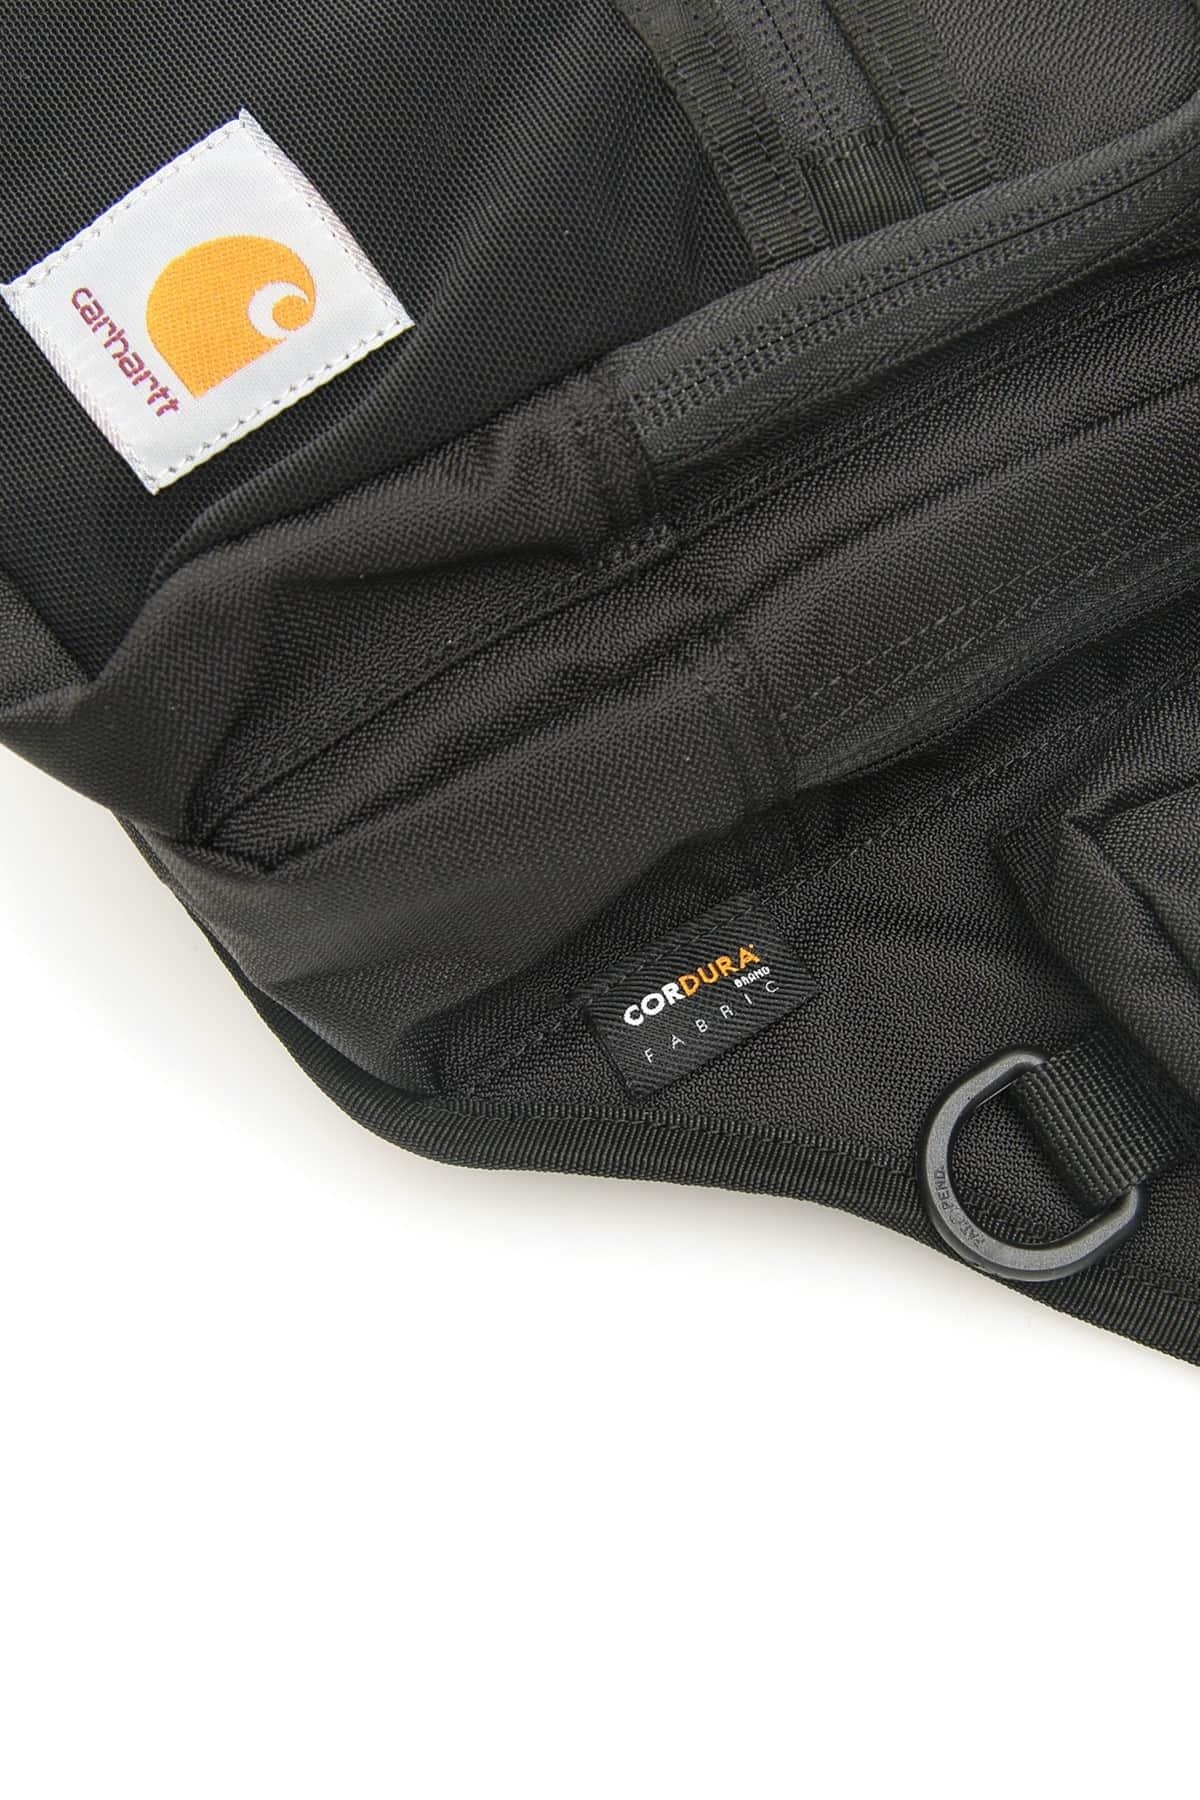 Carhartt WIP Delta Shoulder Bag Black - Cordura Black